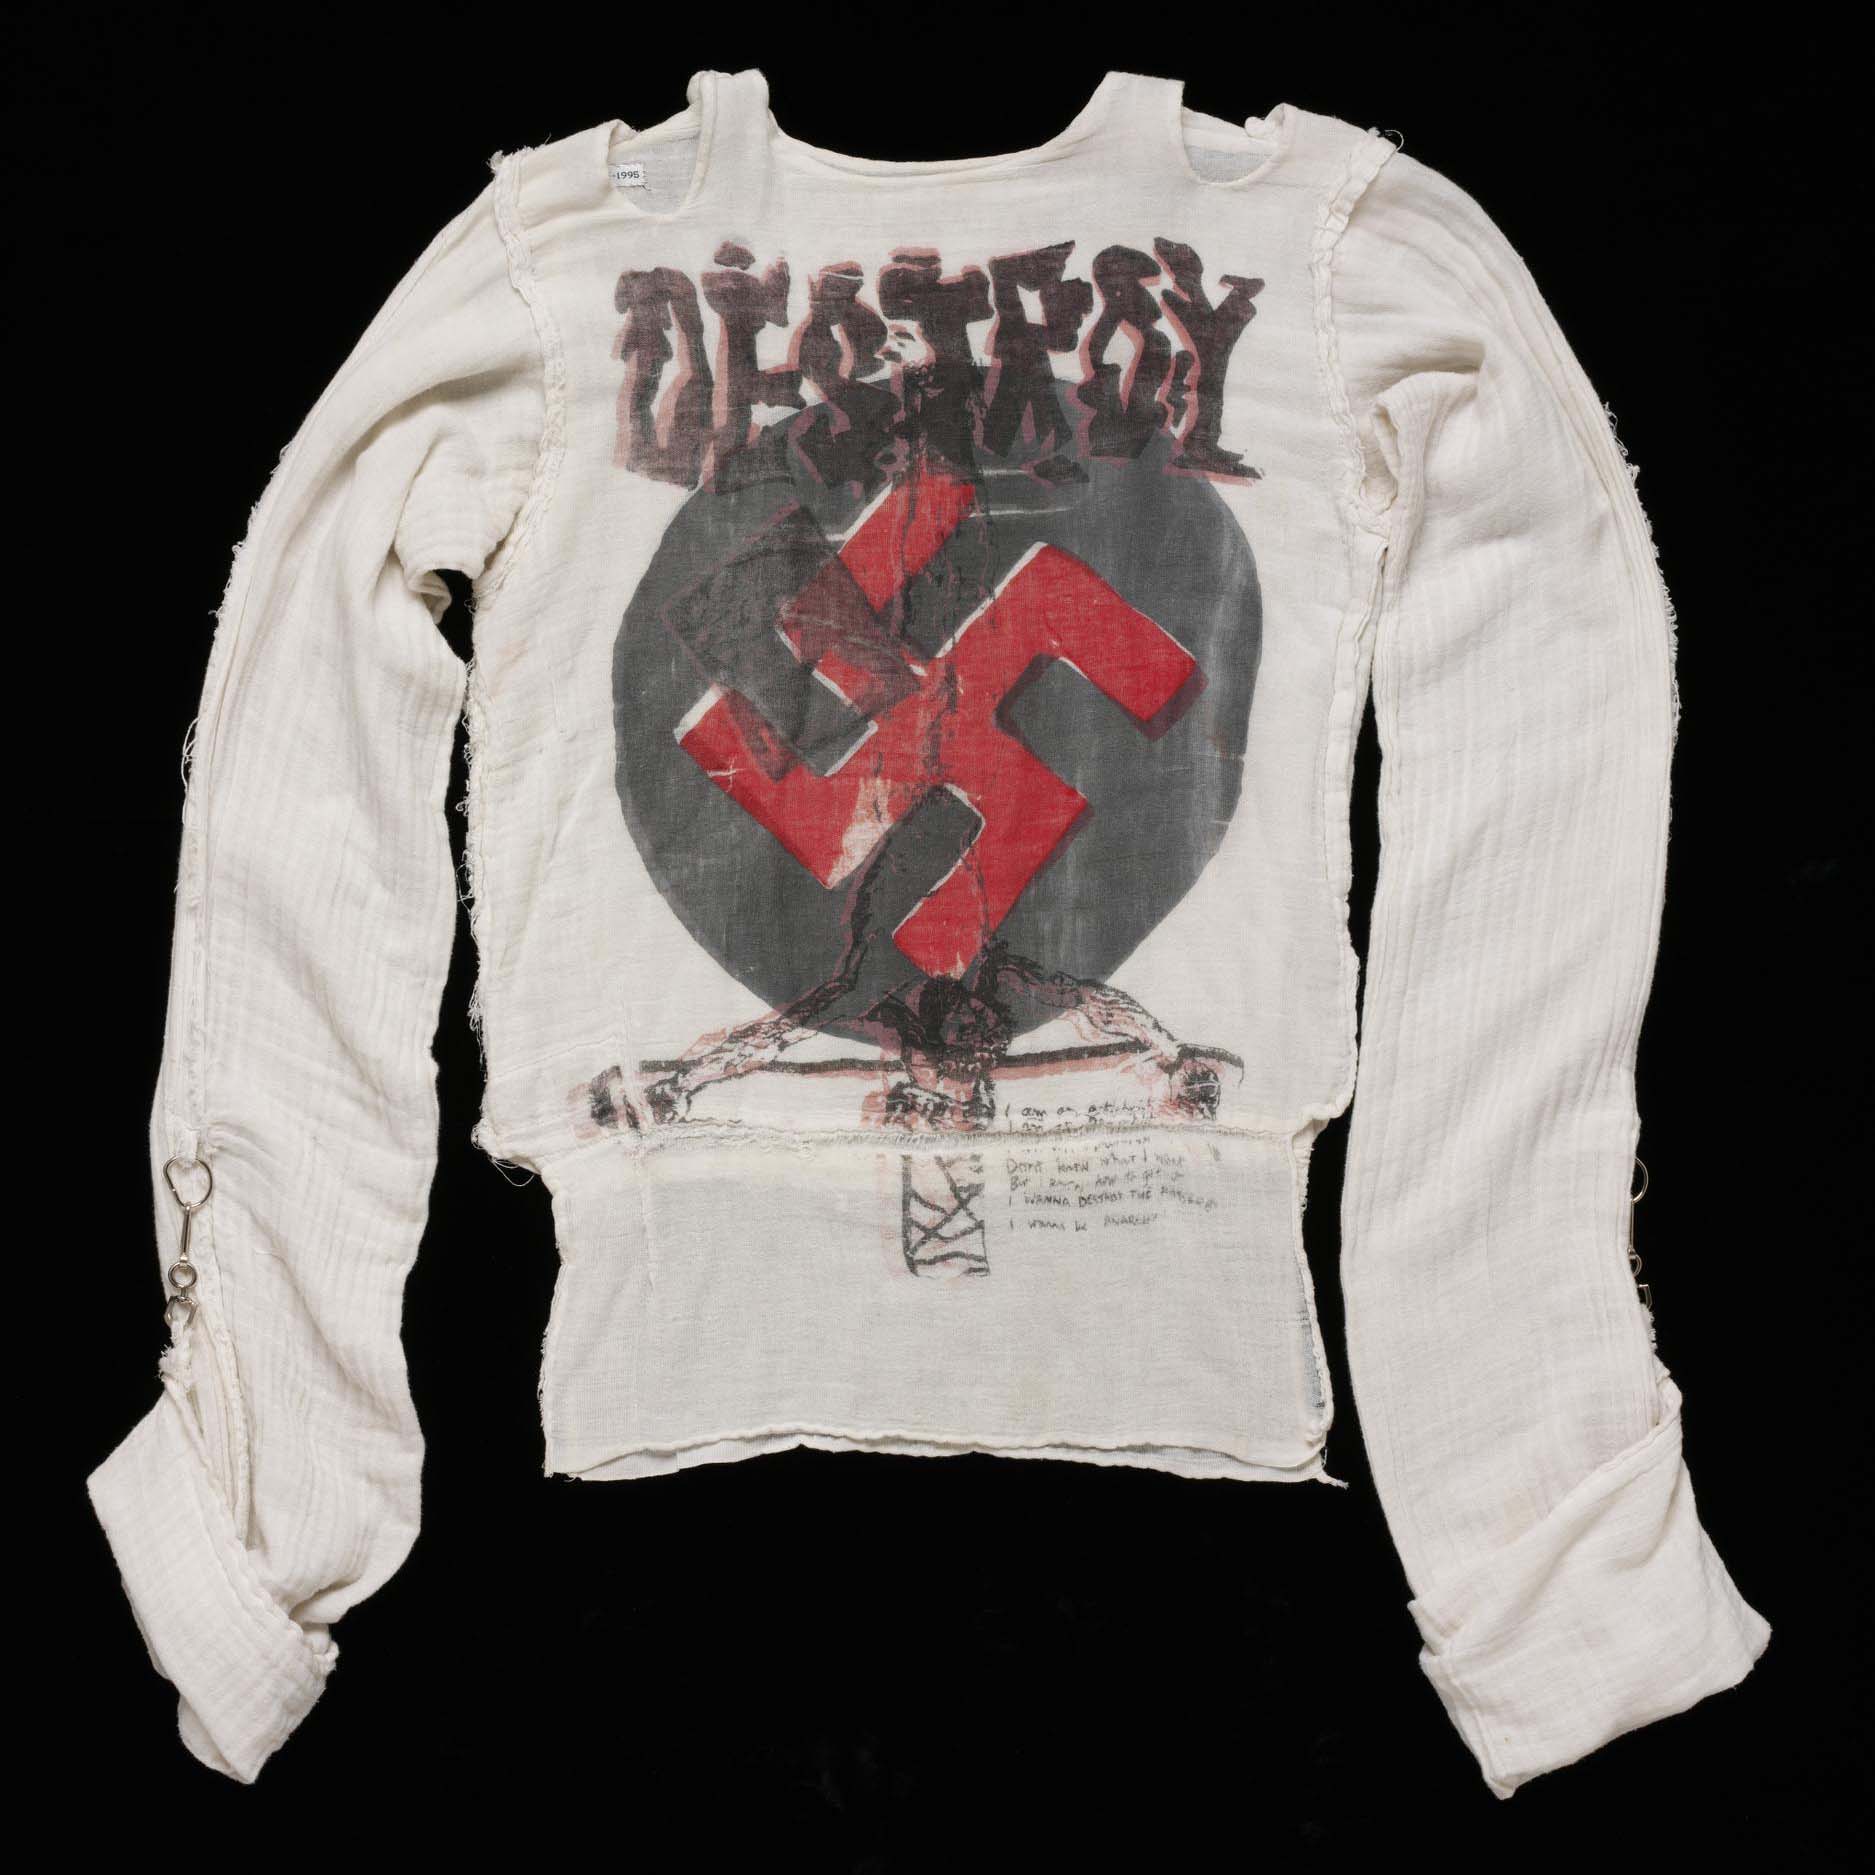 Vivienne Westwood 'Destroy' T-shirt © V&A Museum.